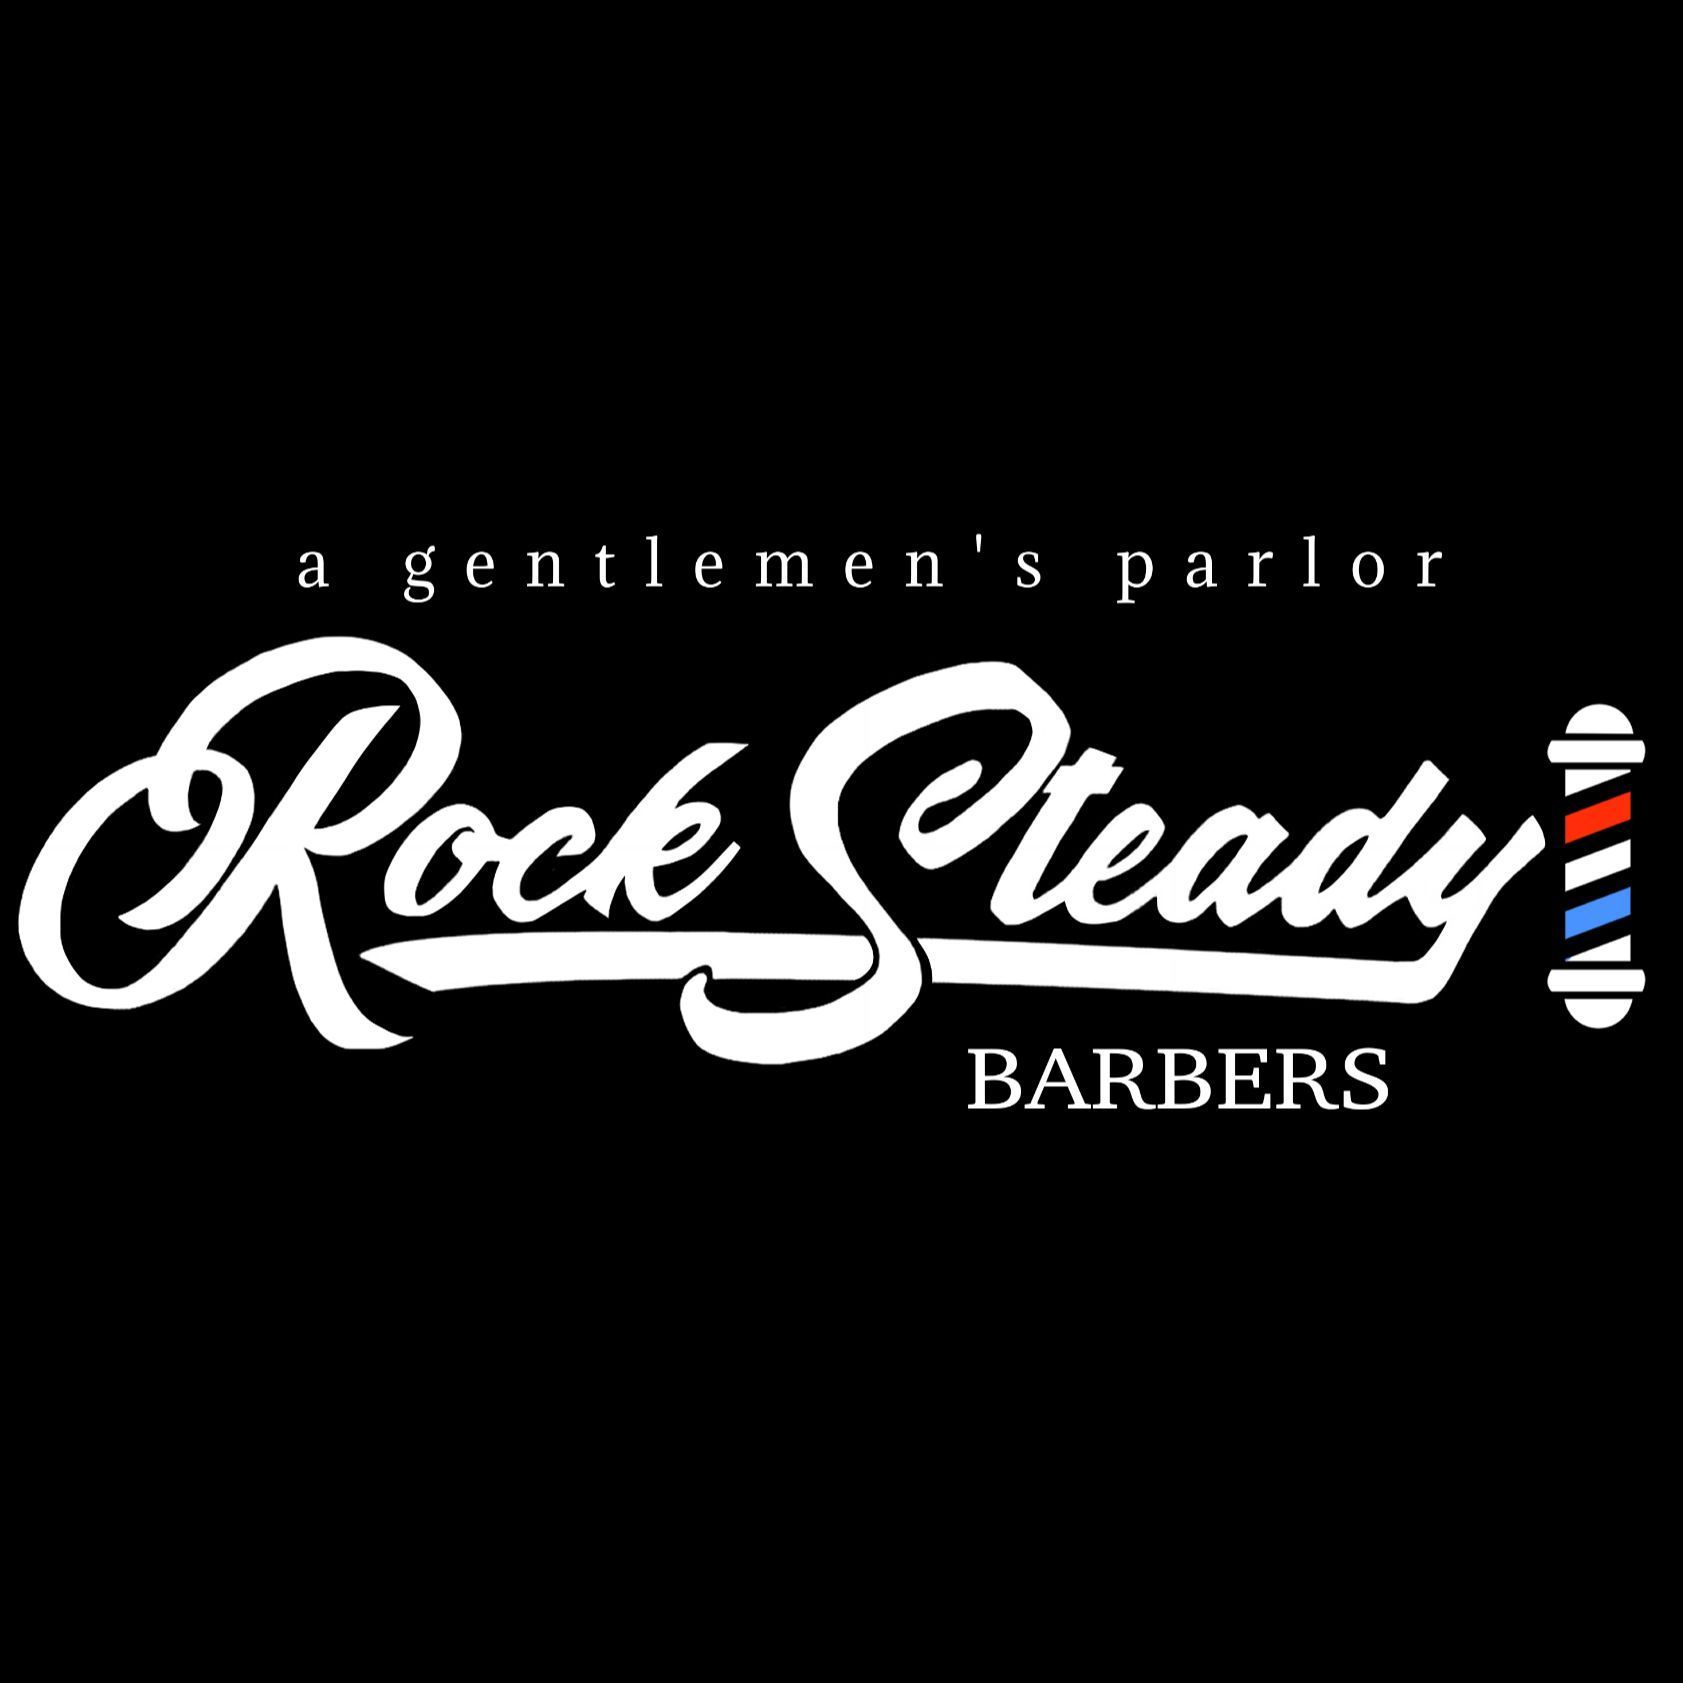 Rock Steady Barbers, 1400 Hi Line Dr., Ste. 51, 100, Dallas, 75207